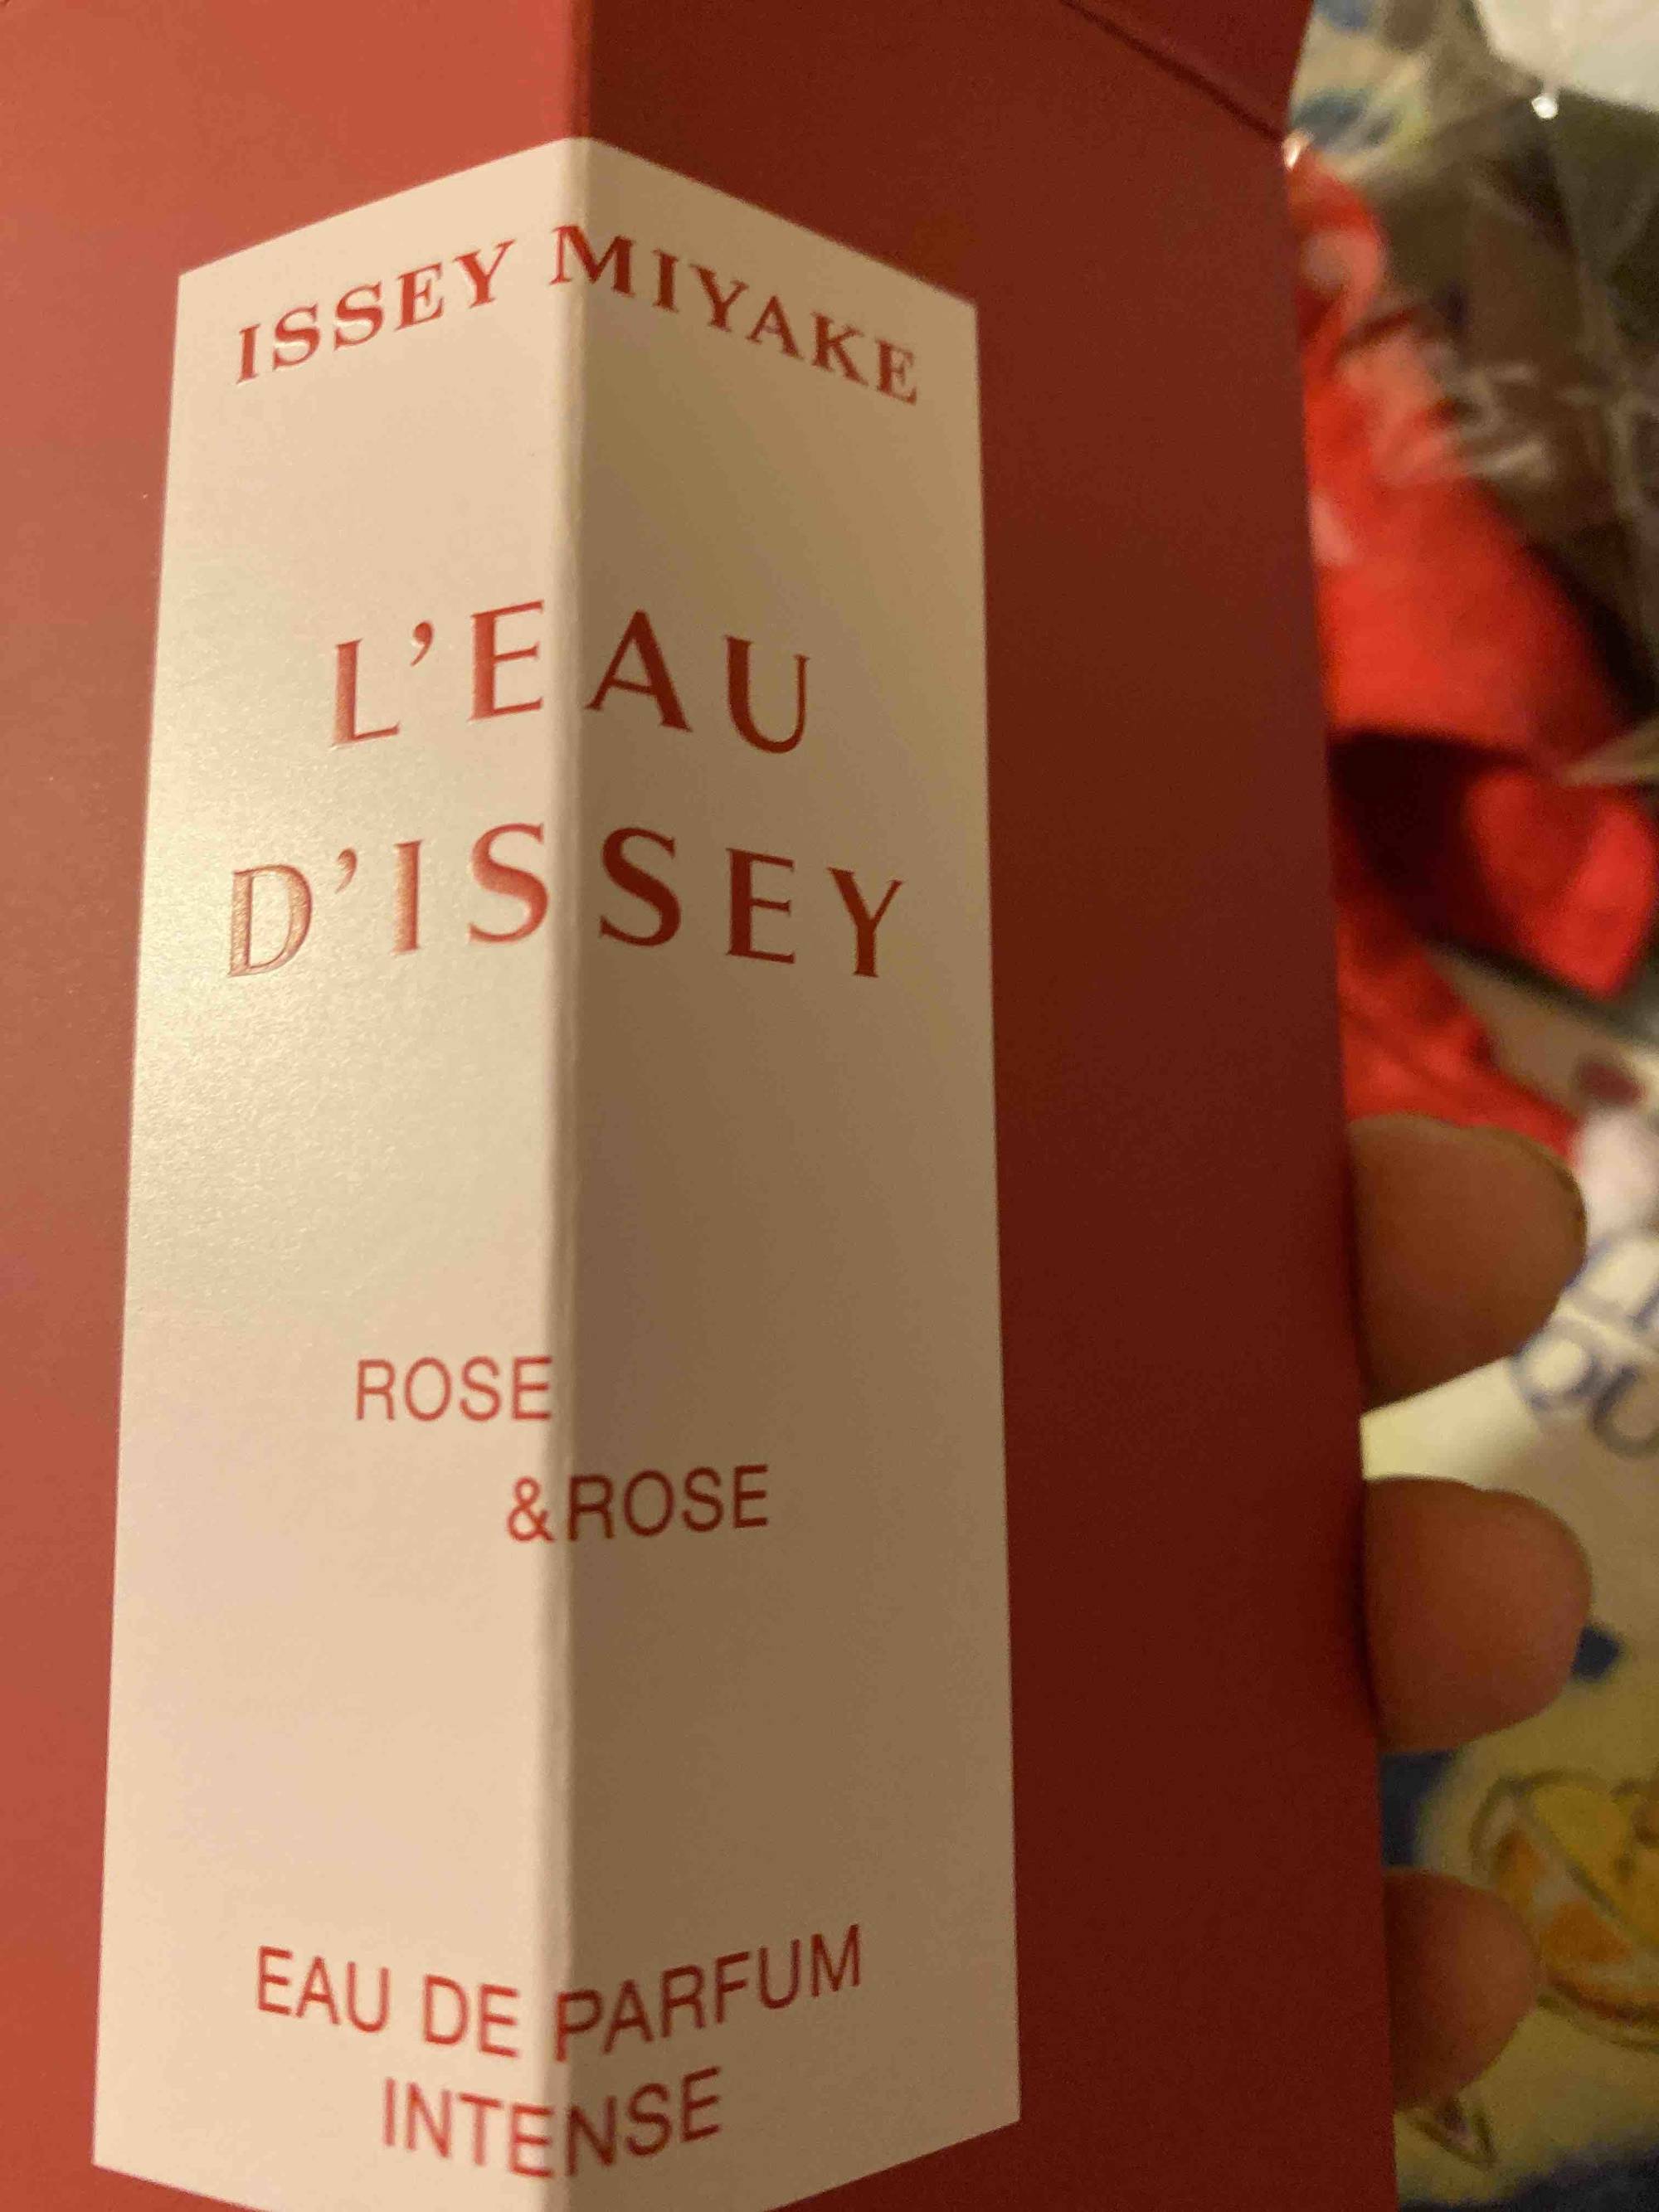 ISSEY MIYAKE - L'eau d'Issey - Rose & Rose - Eau de parfum intense